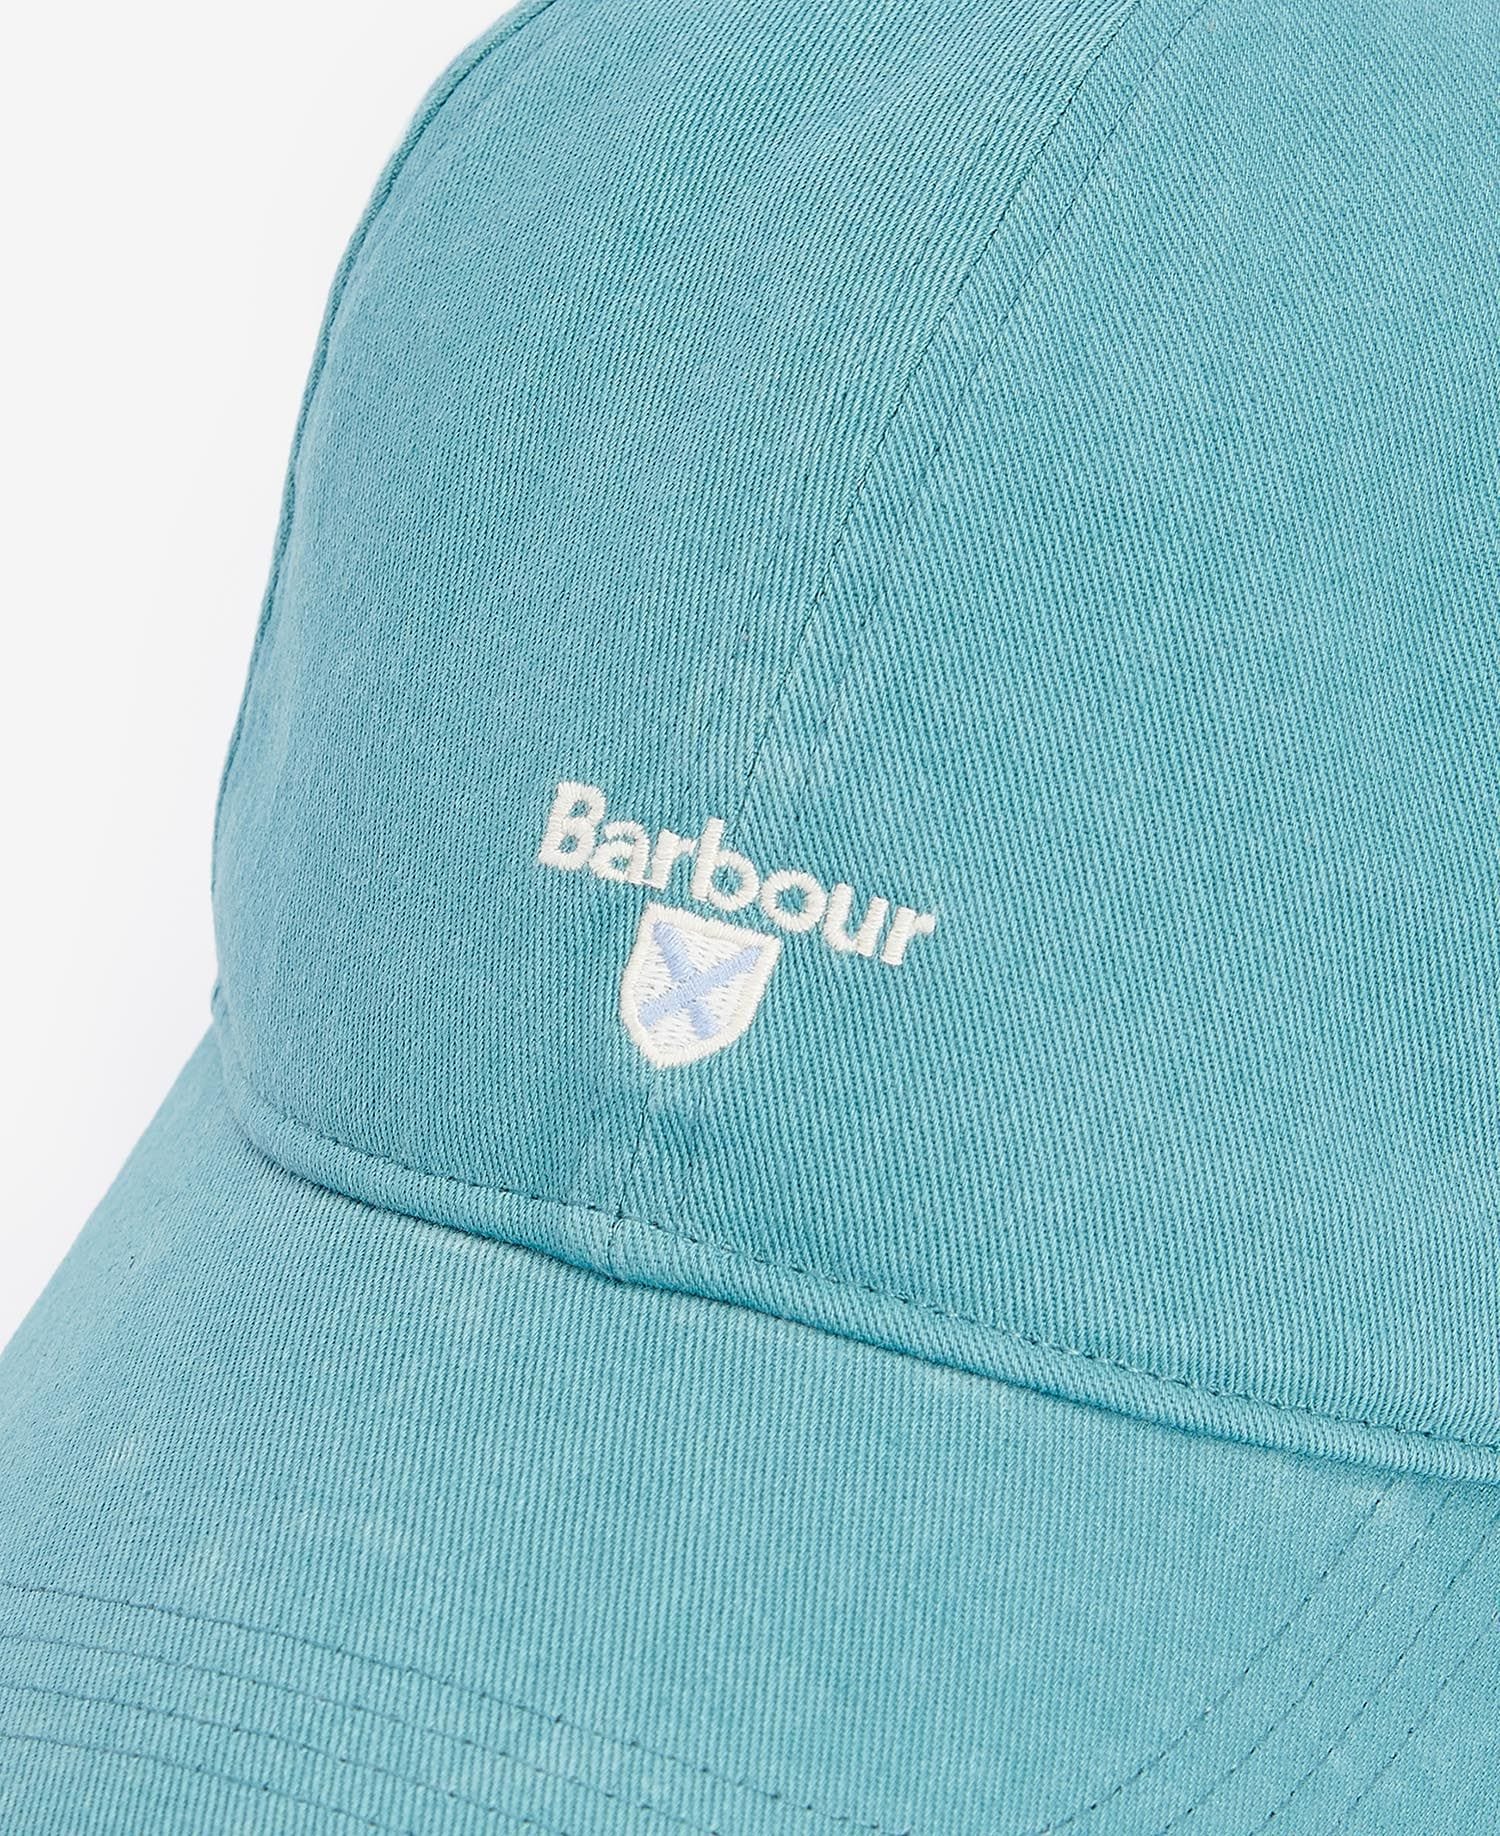 Barbour Cascade Sports Cap in Brittany Blue